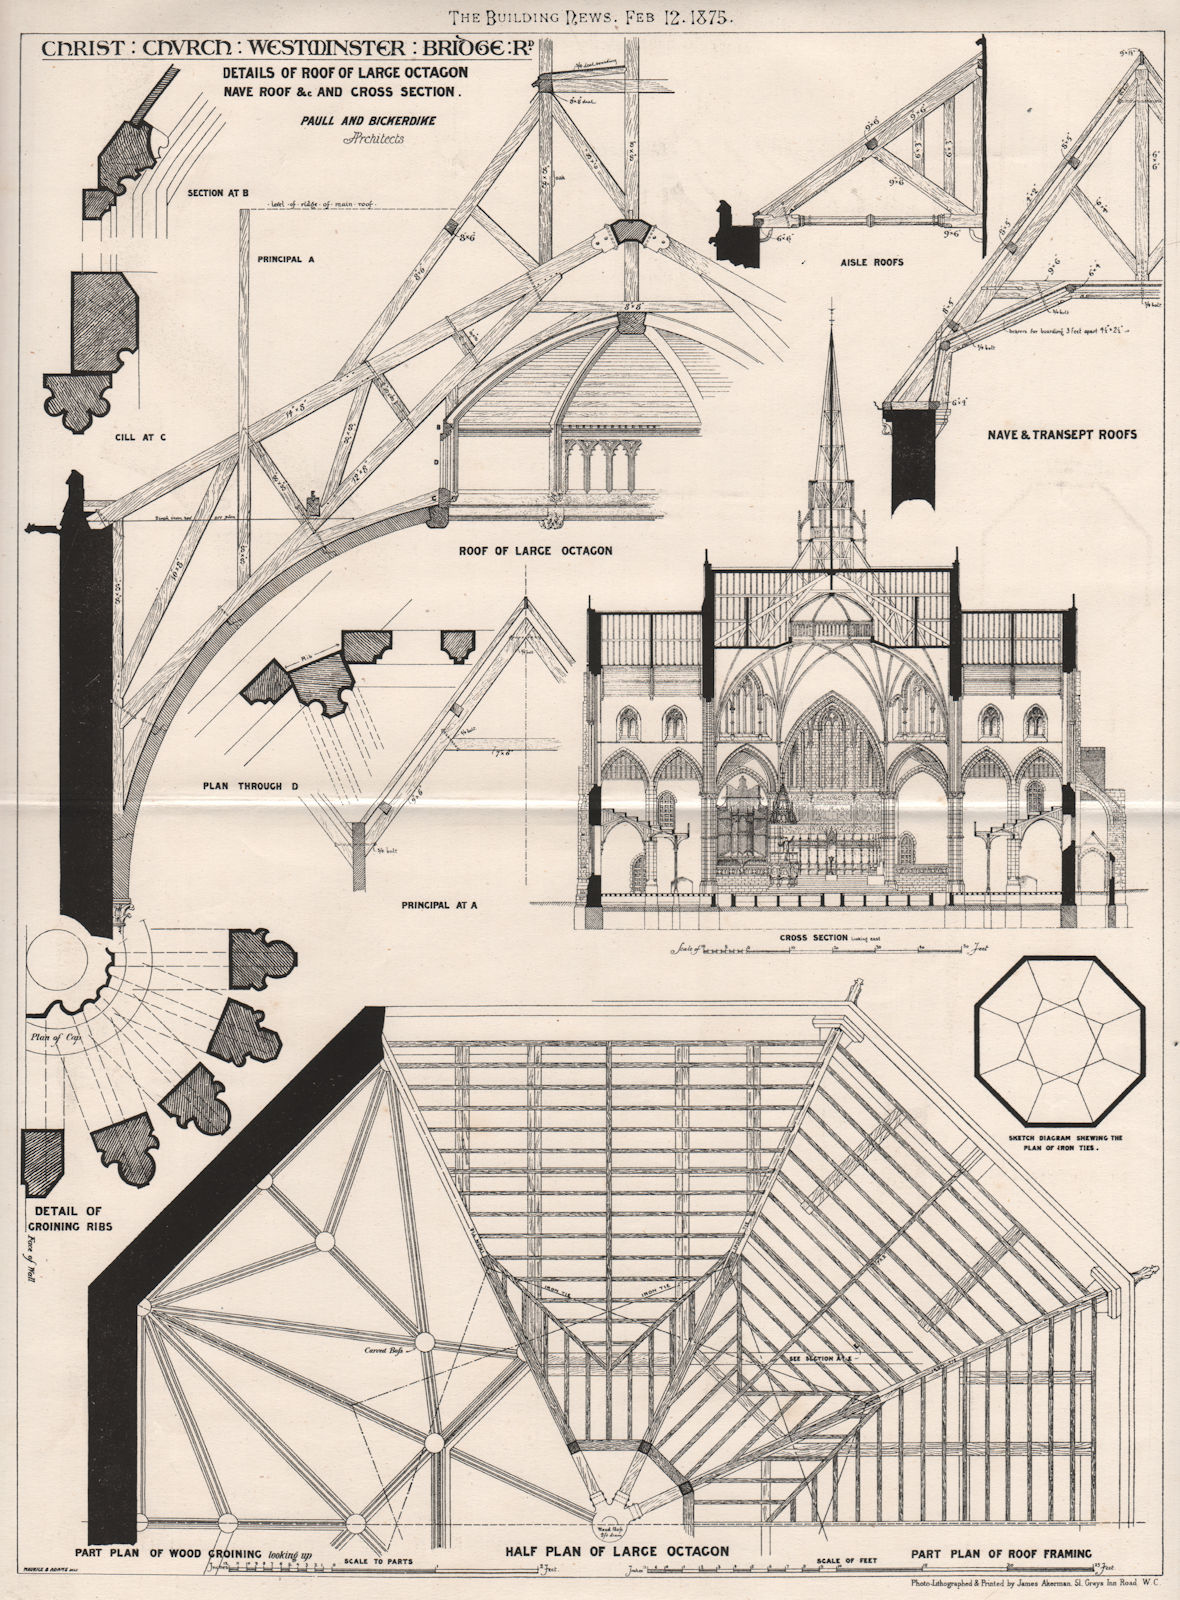 Associate Product Christ Church, Westminster Bridge Rd; Paul & Bickerdike, Architect 1875 print